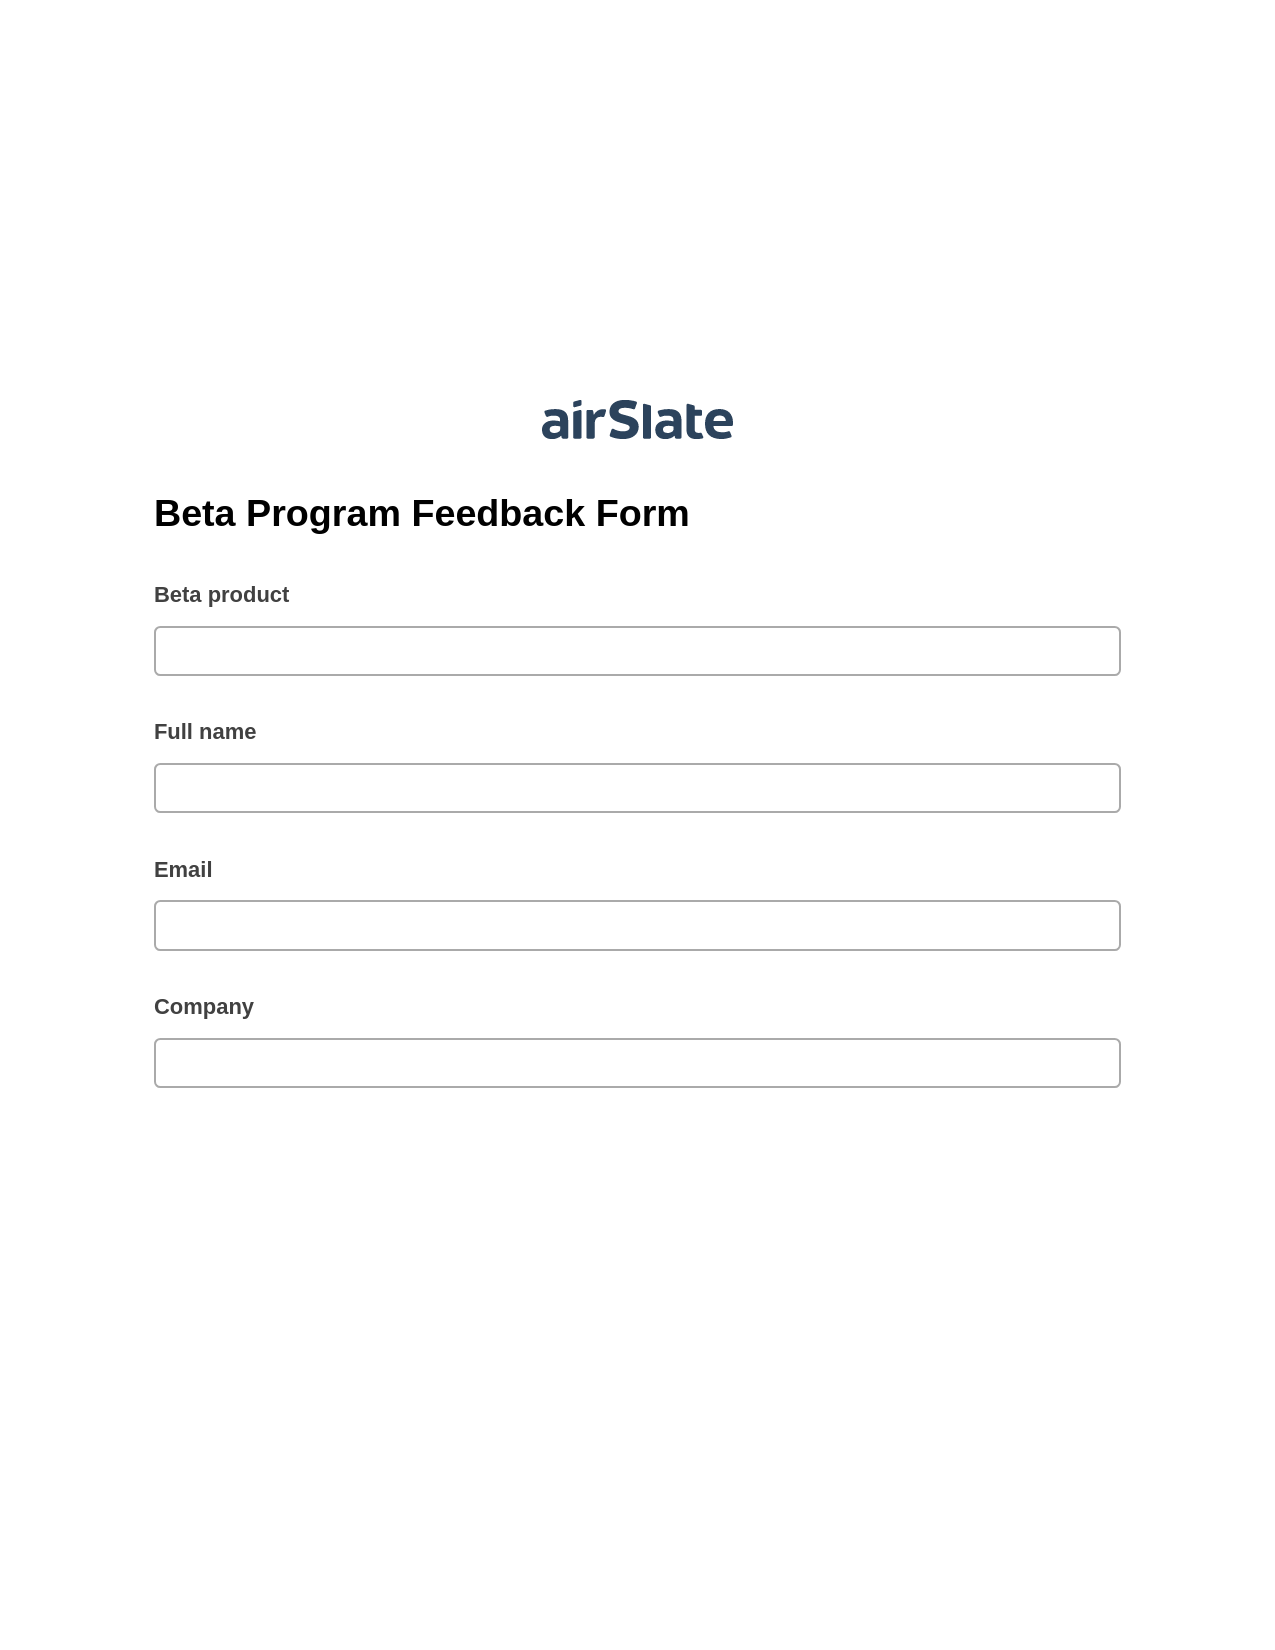 Beta Program Feedback Form Pre-fill from MySQL Bot, Create Slate Reminder Bot, Export to Smartsheet